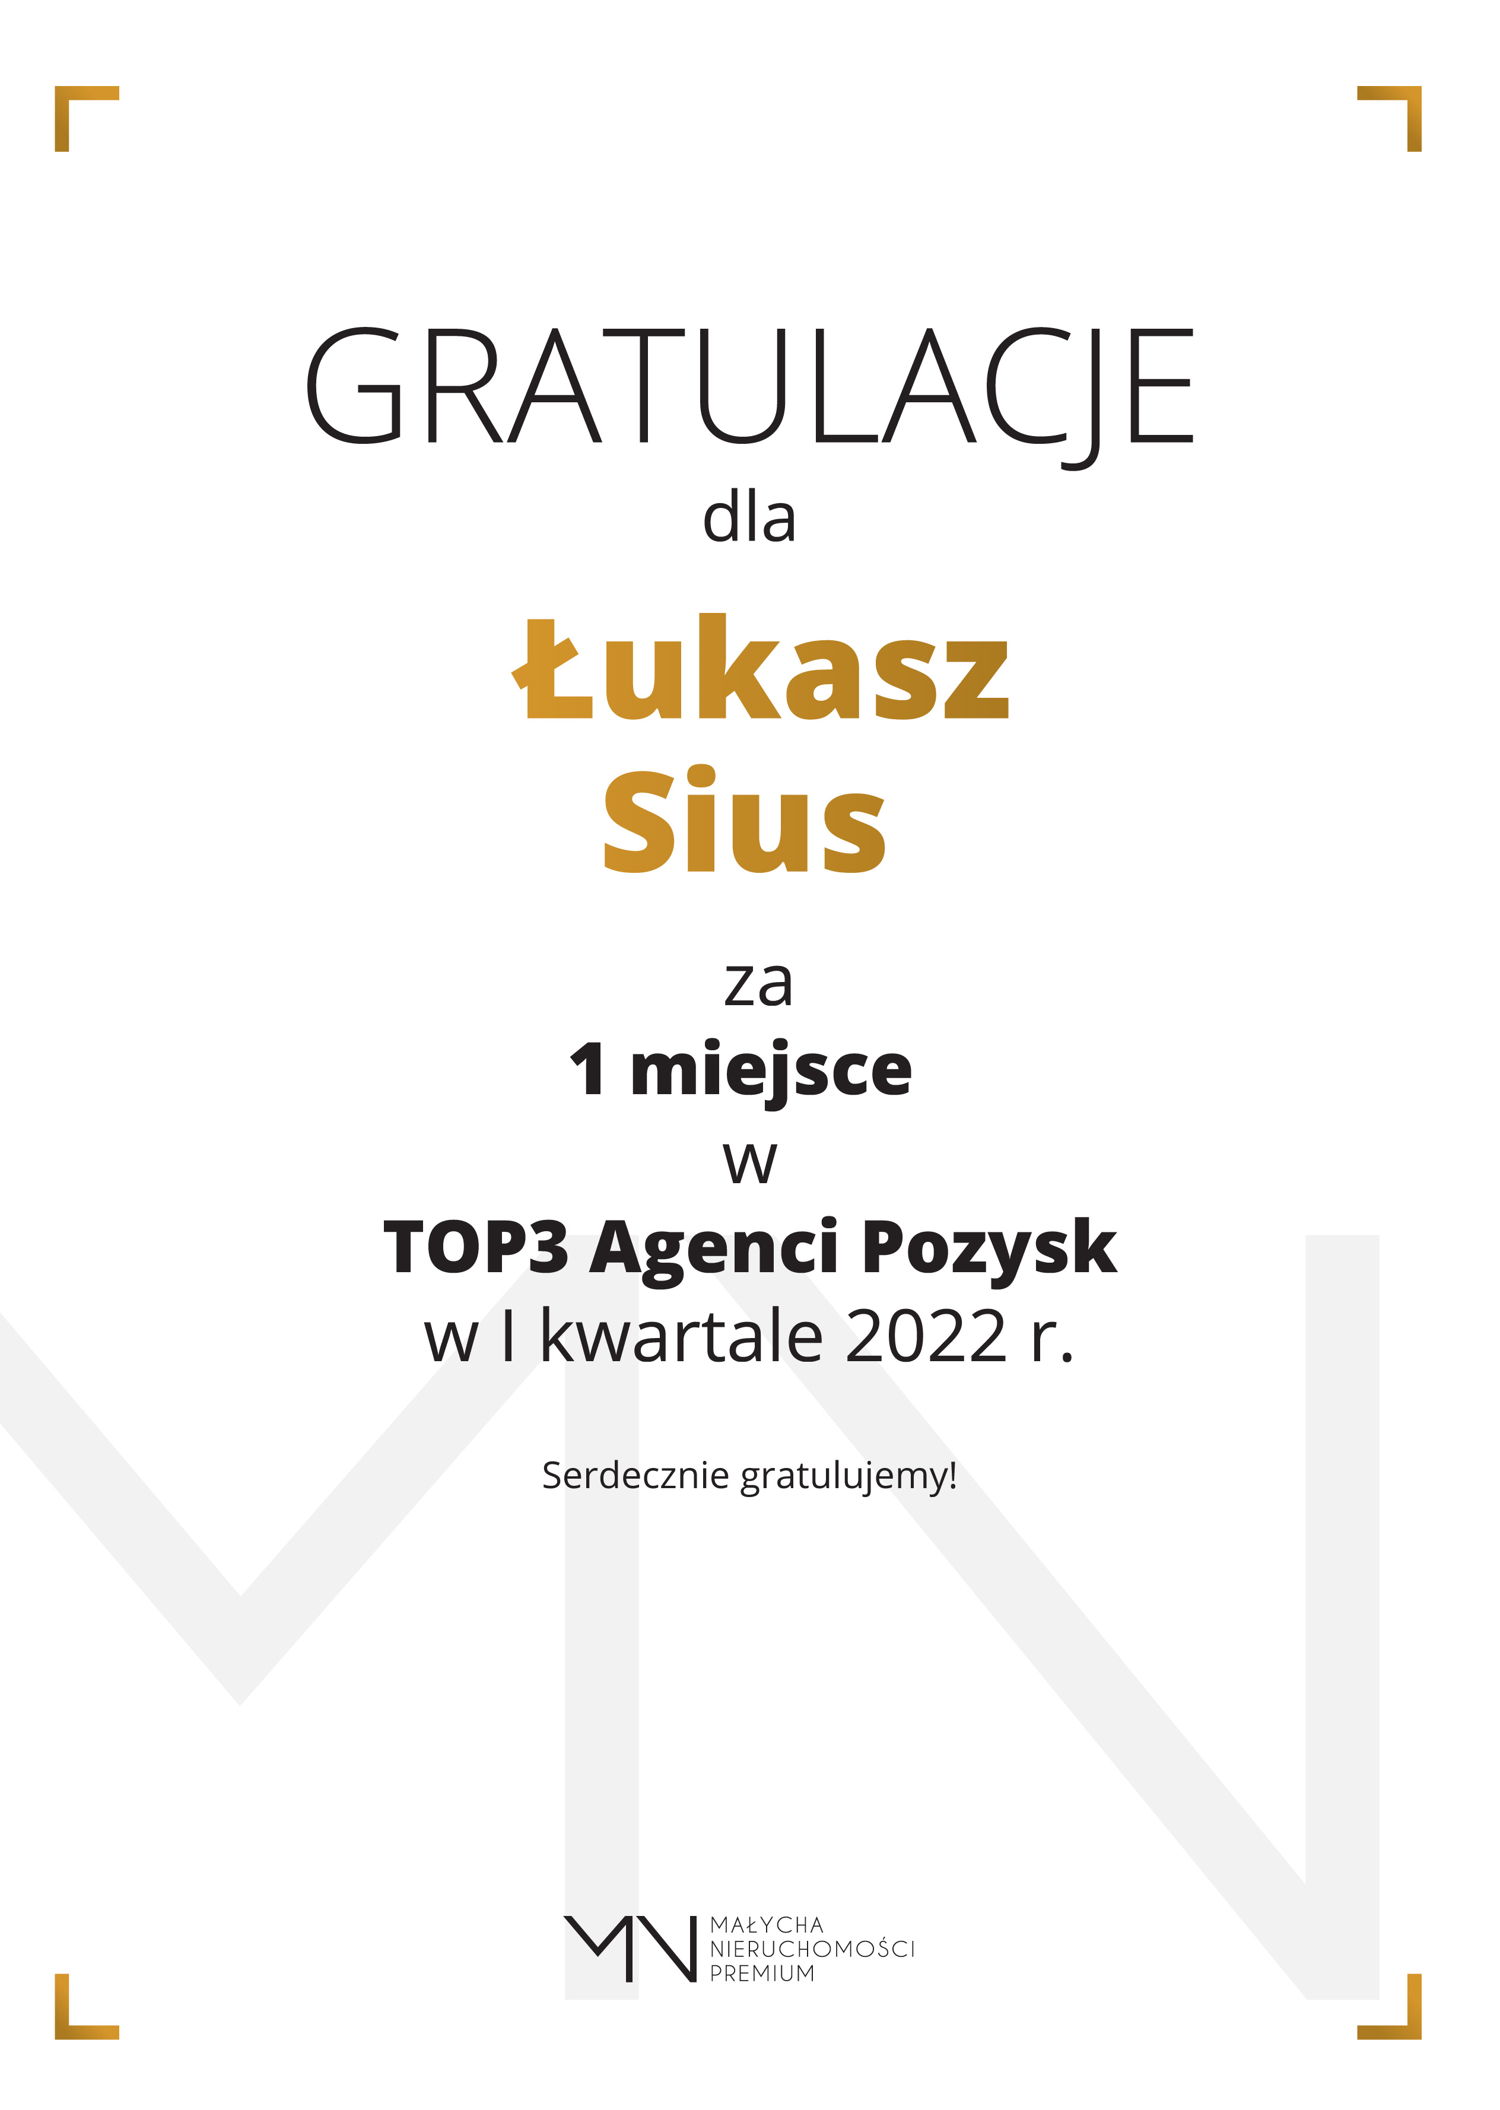 lukasz_Sius_TOP3_Agenci_Pozysk-01